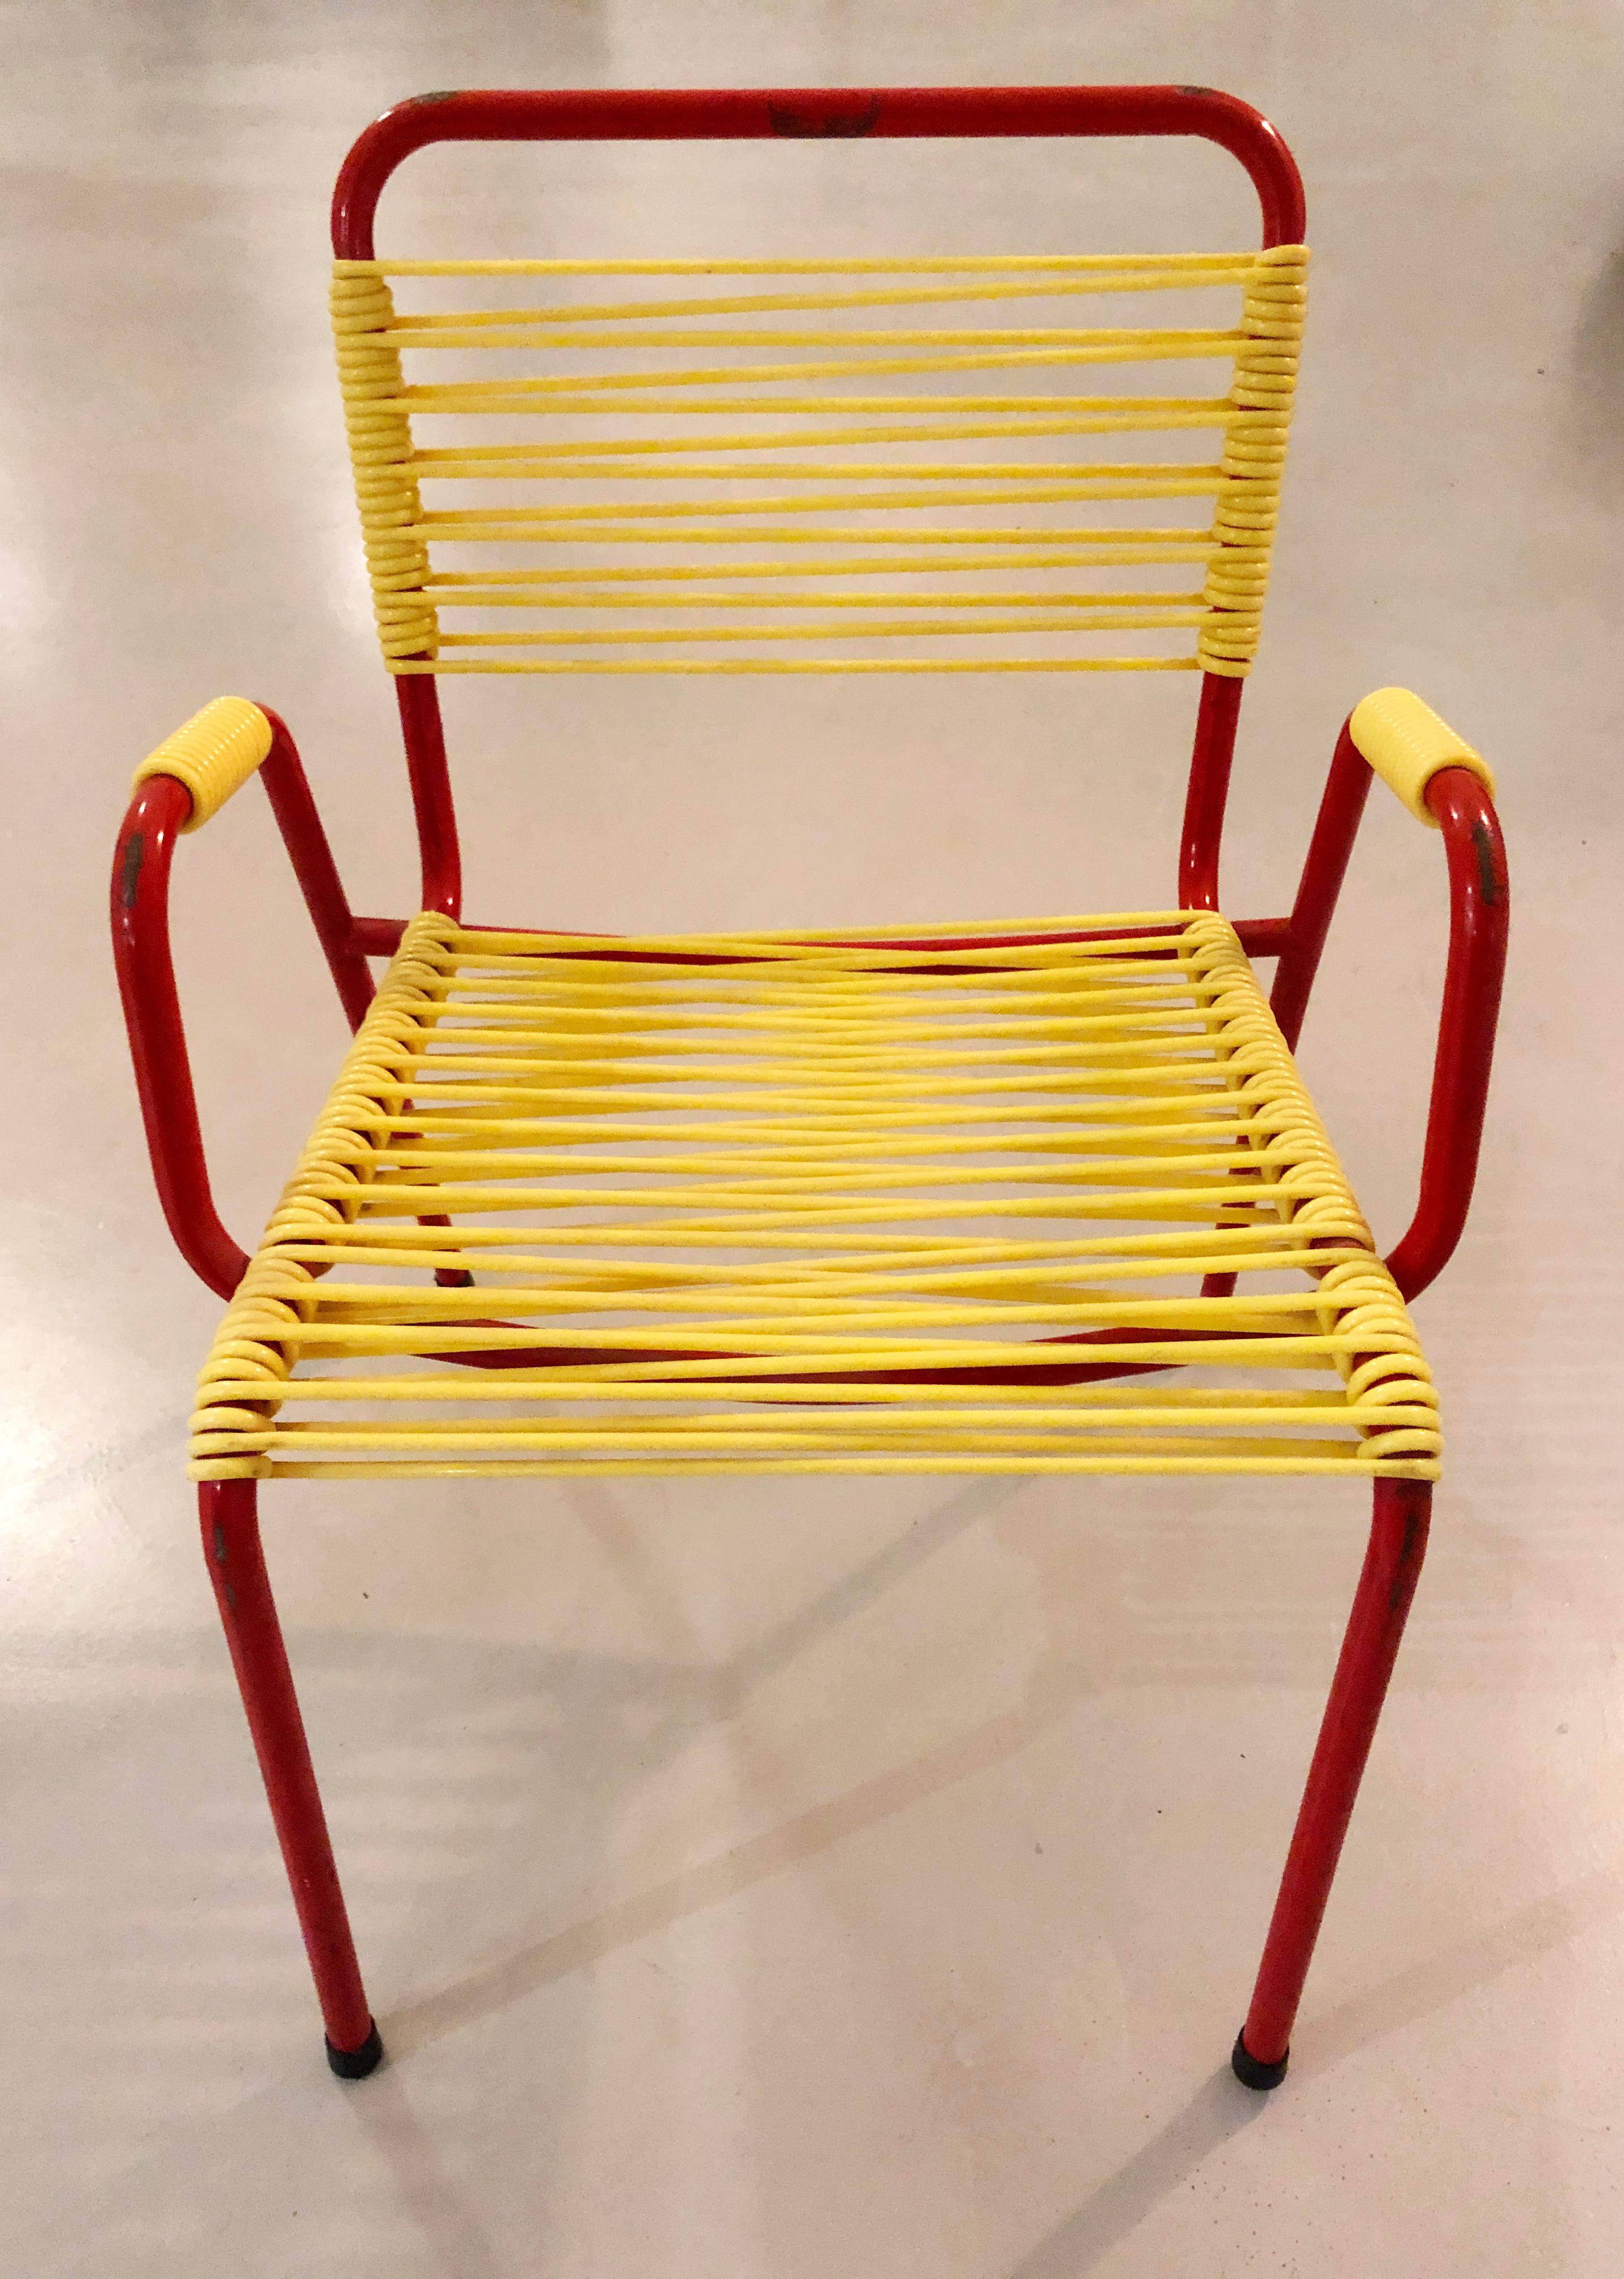 Children's chair scoubidou Torck - 1950's For Sale 4